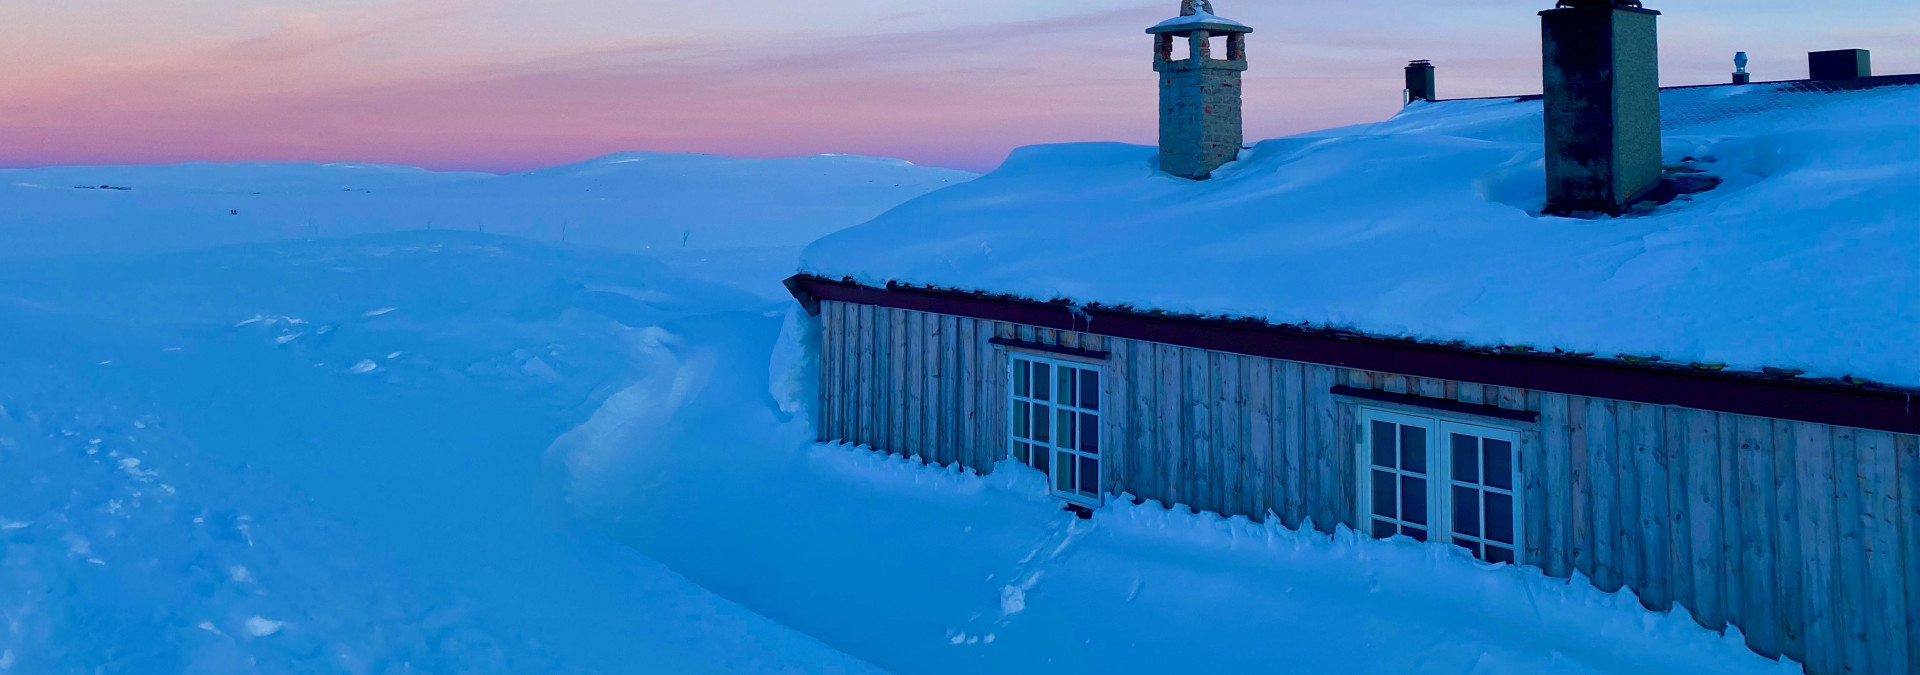 Hardangervidda: Heroes of Telemark